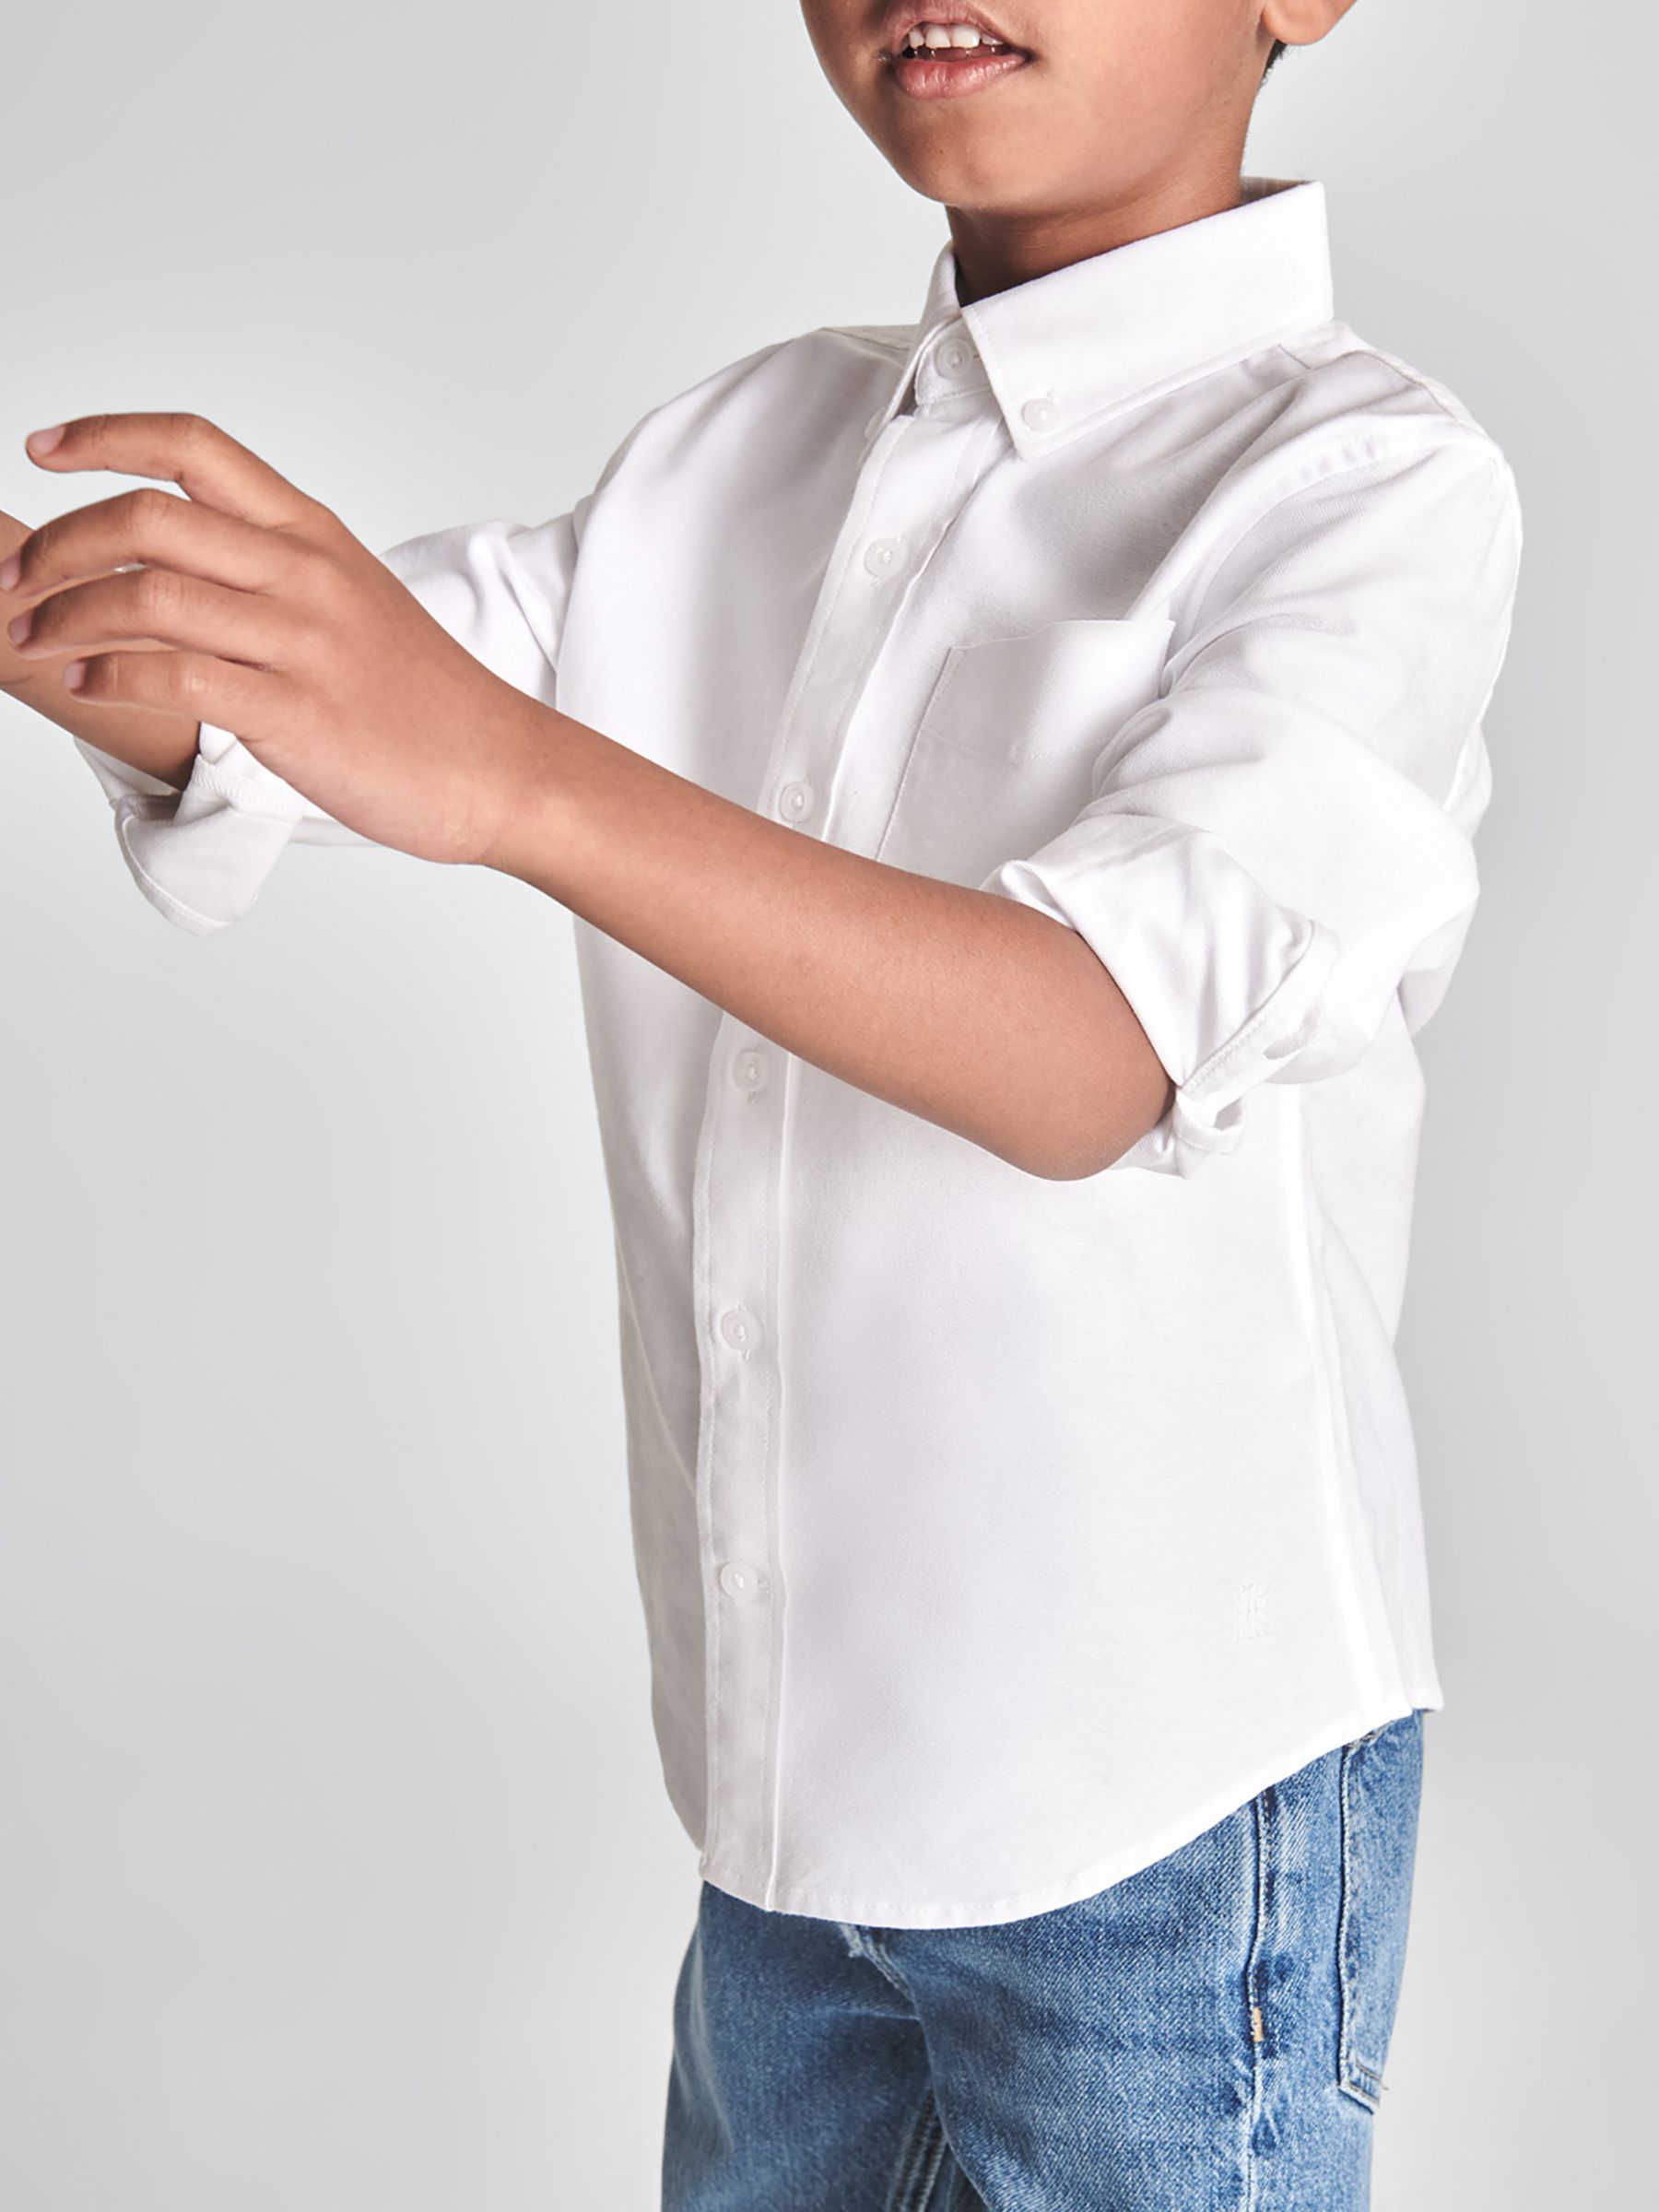 Reiss Kids' Greenwich Oxford Shirt, White, 4-5 years